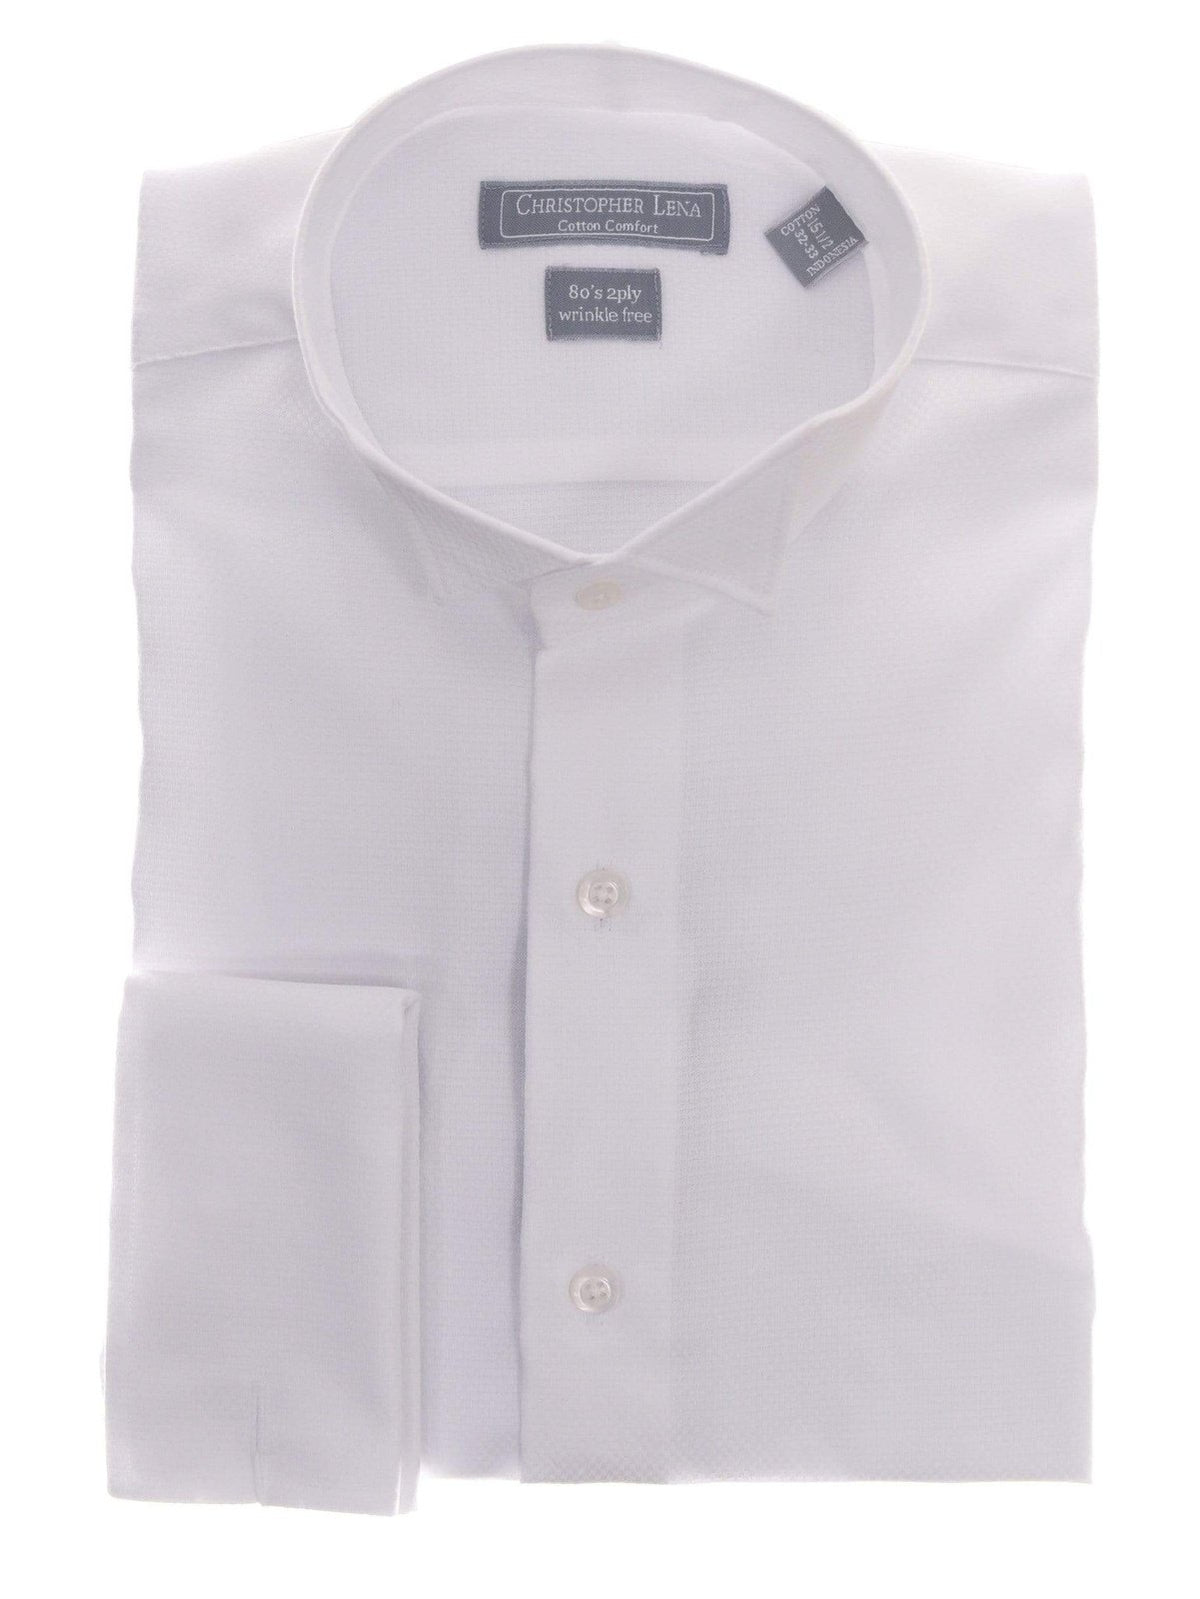 Christopher Lena SHIRTS Regular Fit White Textured Wingtip Collar Wrinkle Free Cotton Tuxedo Dress Shirt